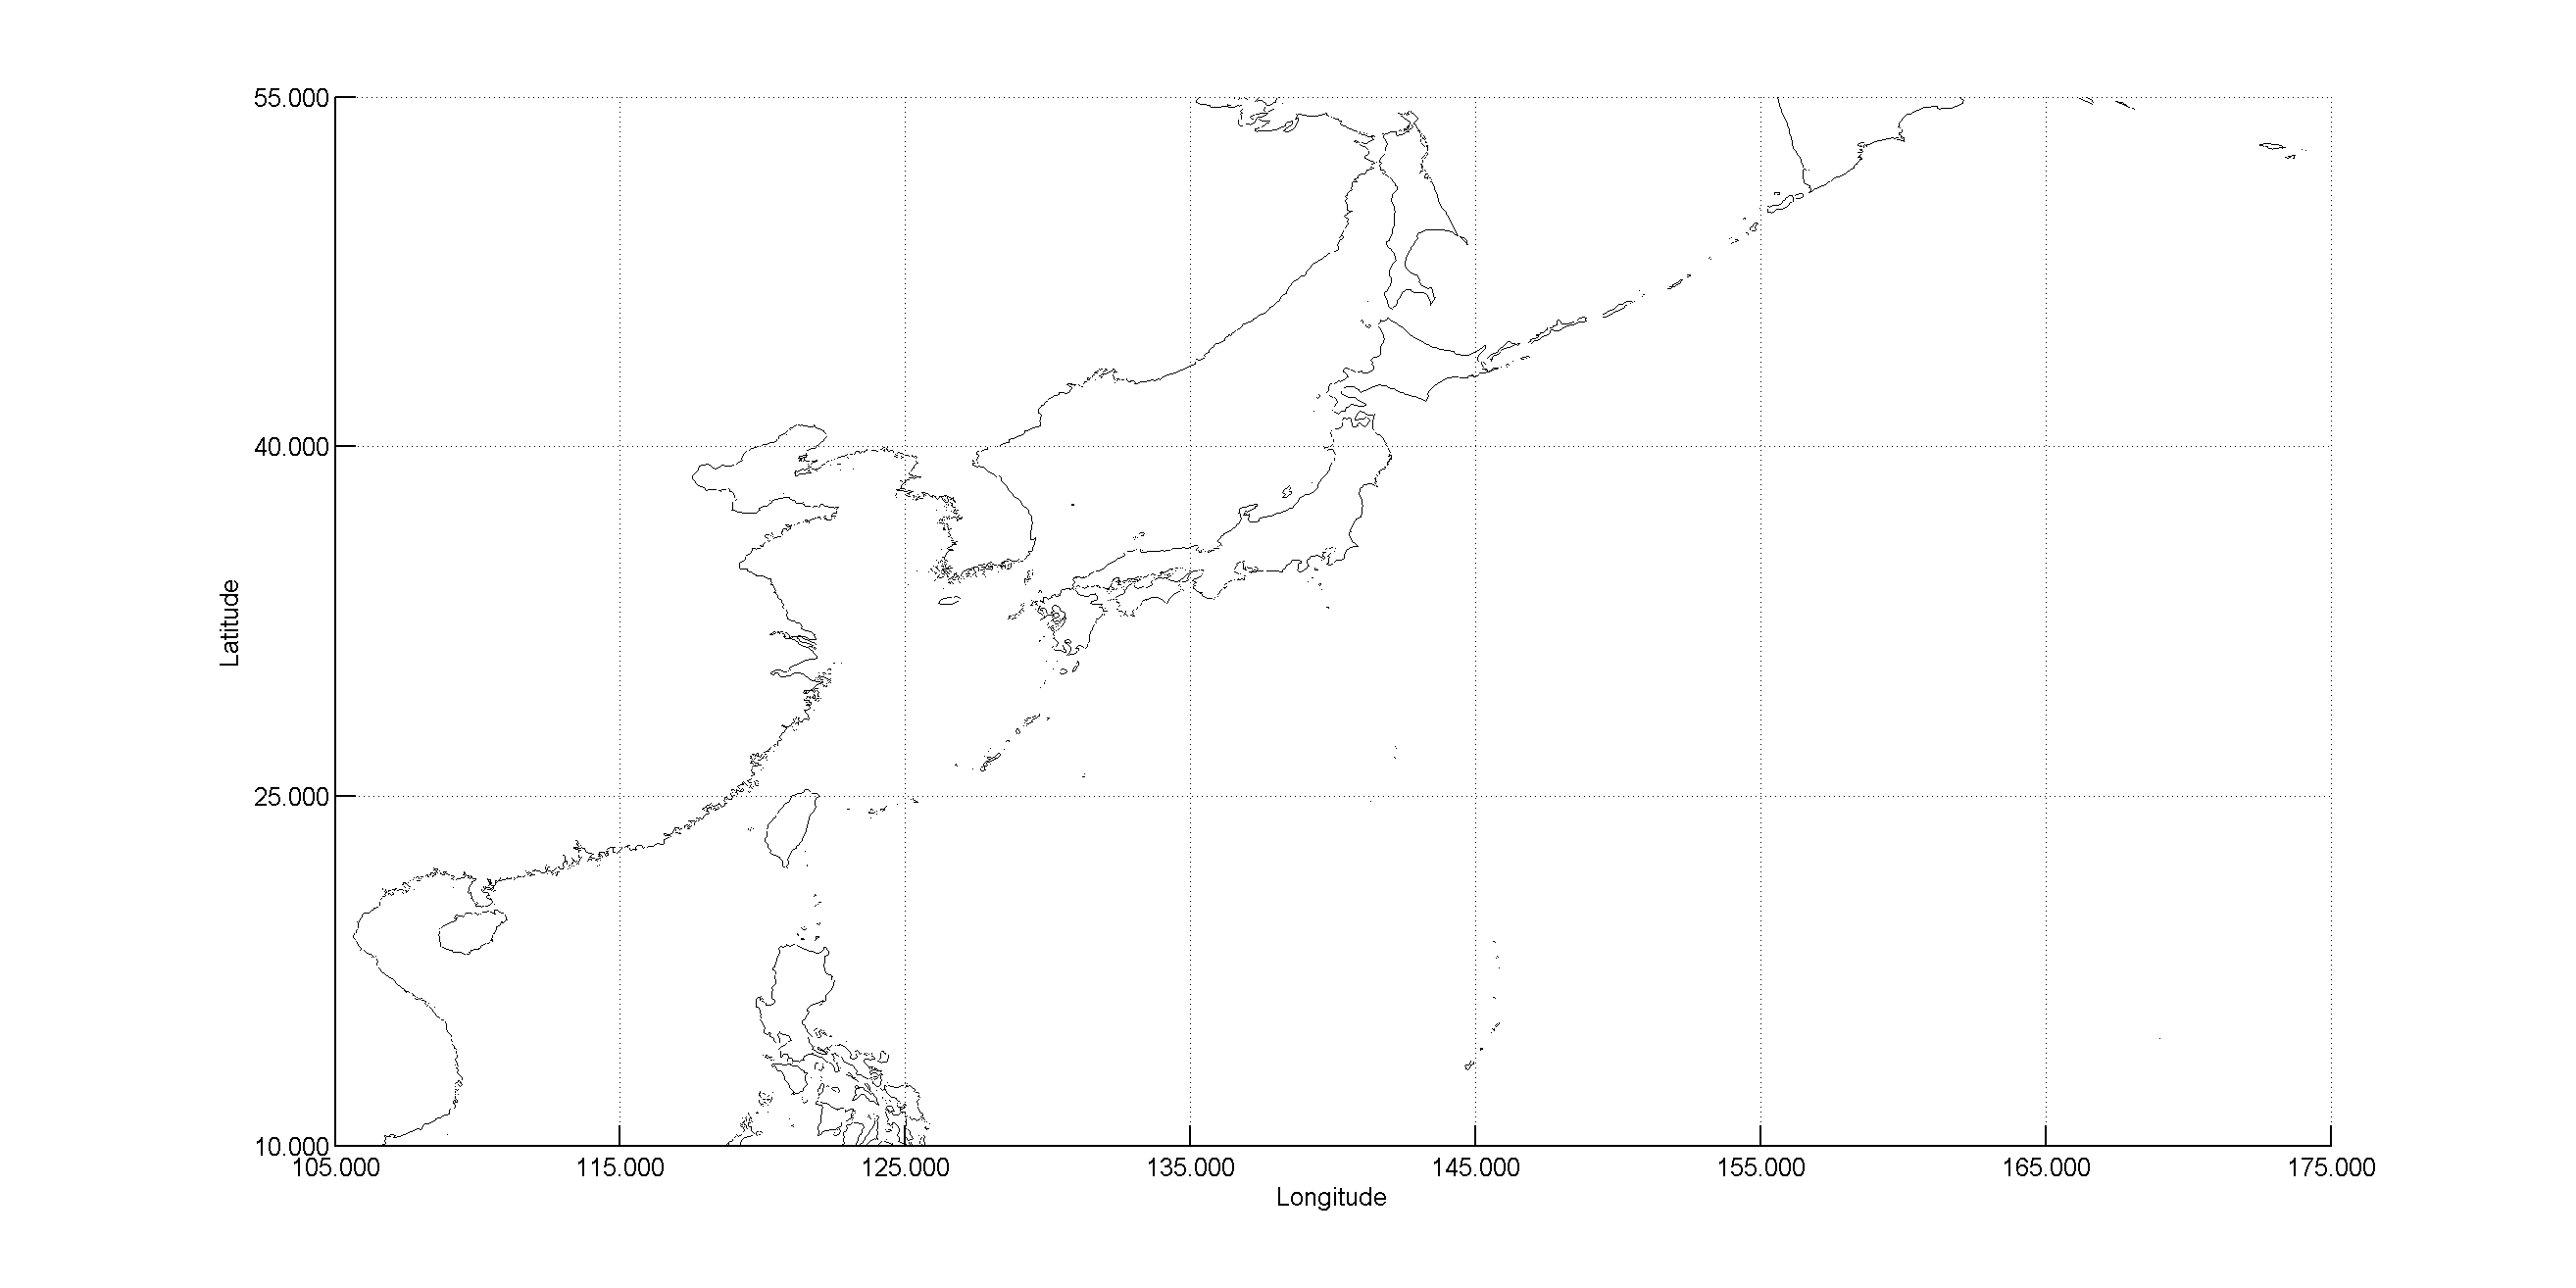 CYCLE_144 - Japan Ascending passes